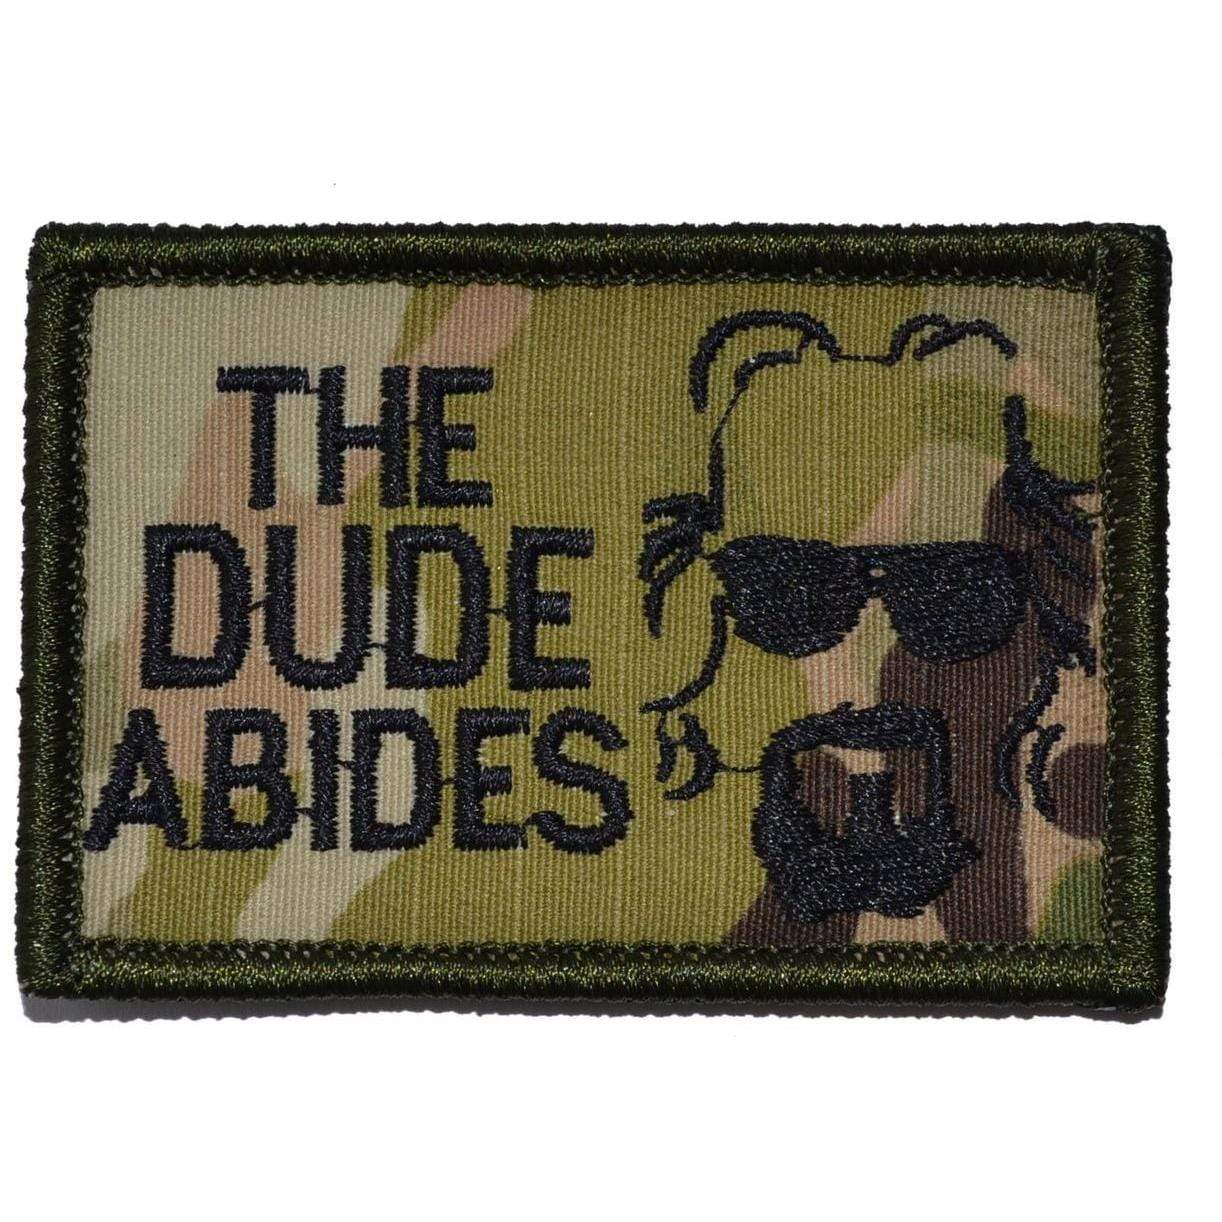 Tactical Gear Junkie Patches MultiCam The Dude Abides, The Big Lebowski - 2x3 Patch